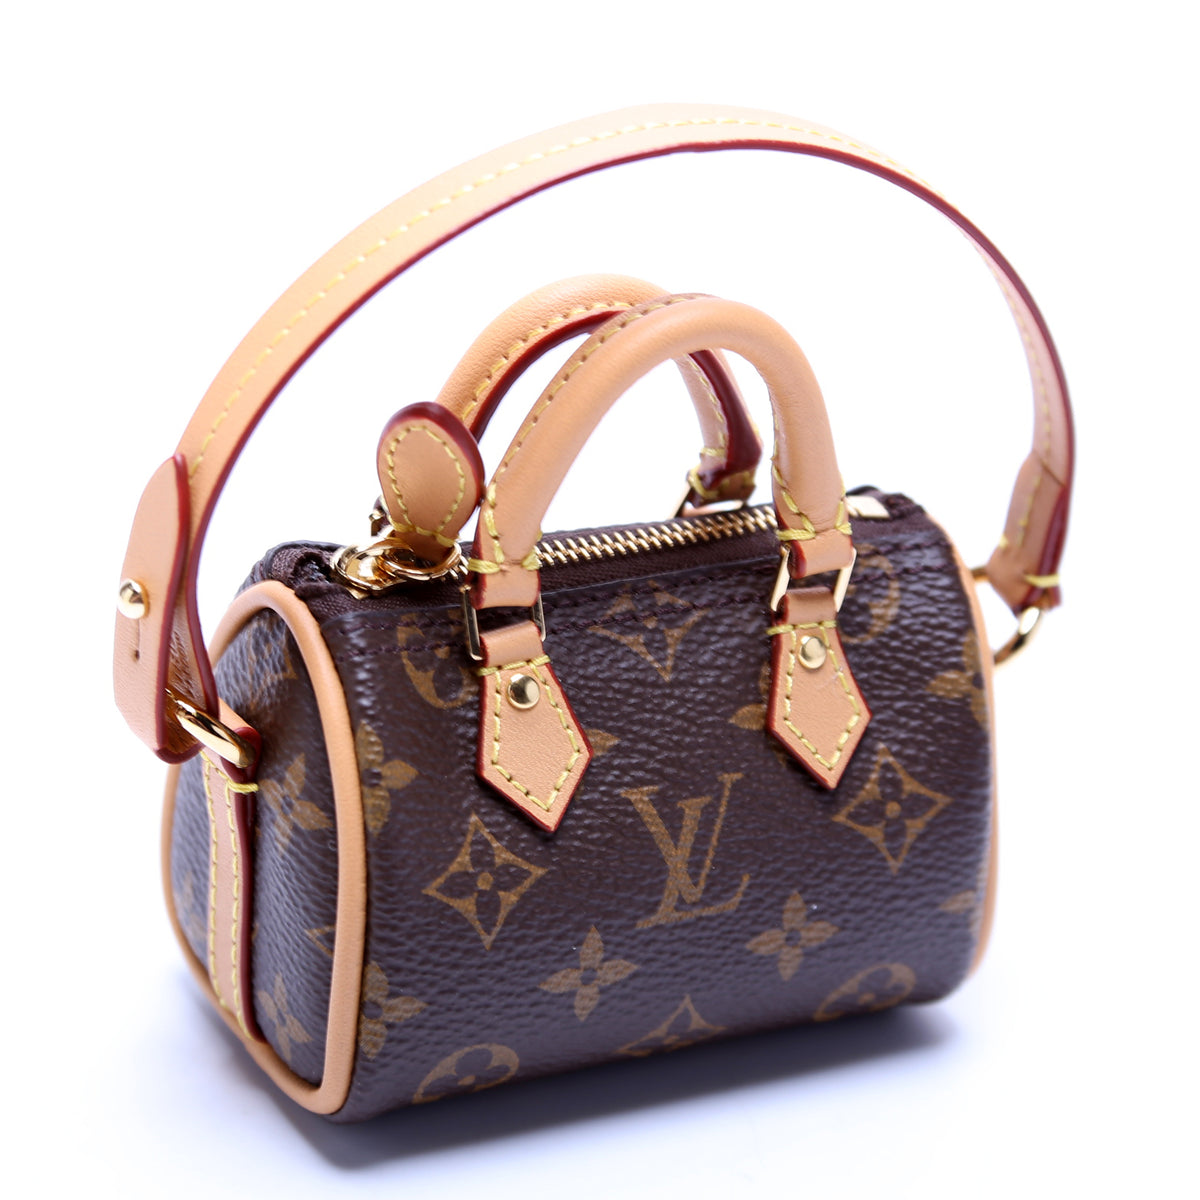 Louis Vuitton Inclusion Speedy Bag Charm at Jill's Consignment